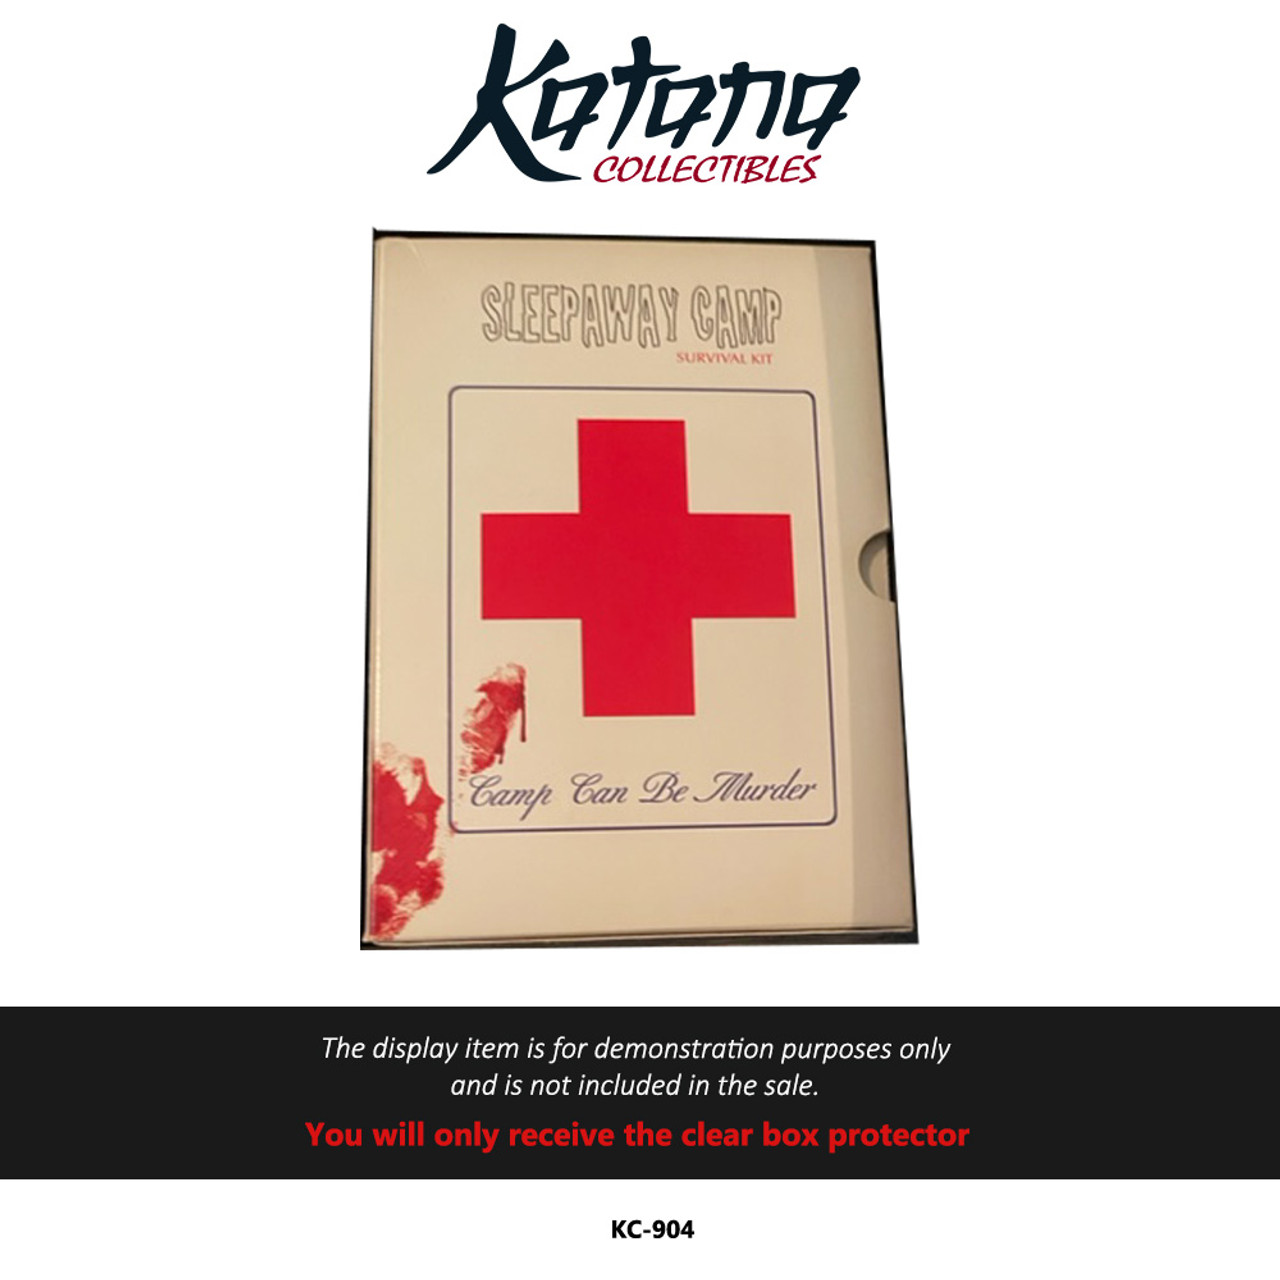 Katana Collectibles Protector For Sleepaway Camp Survival Kit DVD